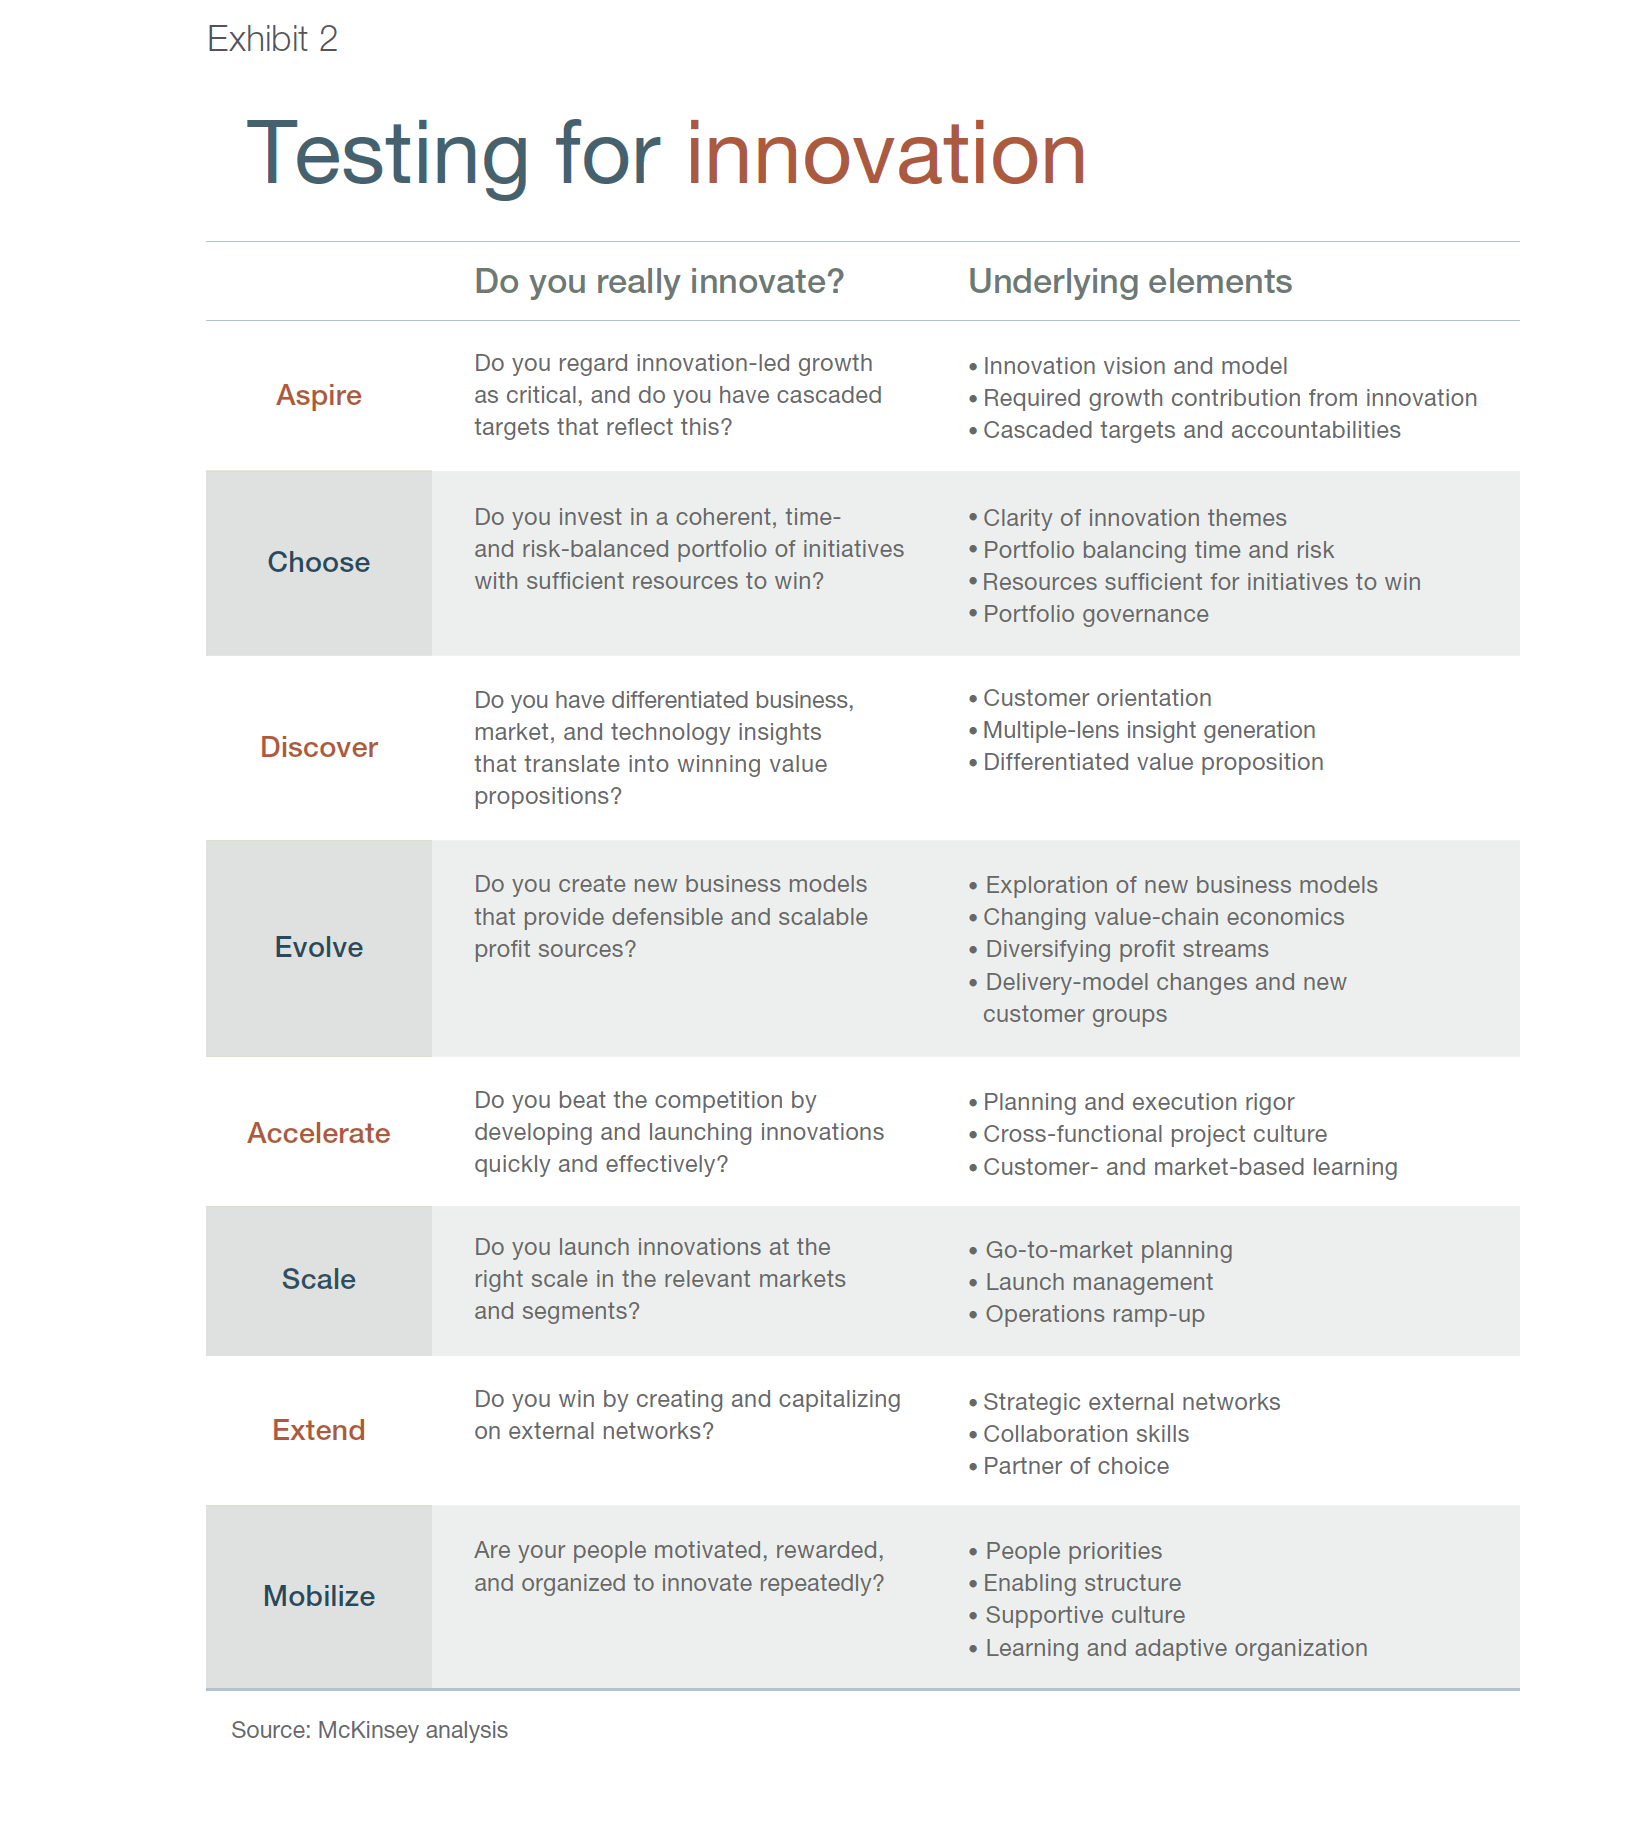 Exhibit 2 - Testing for innovation 